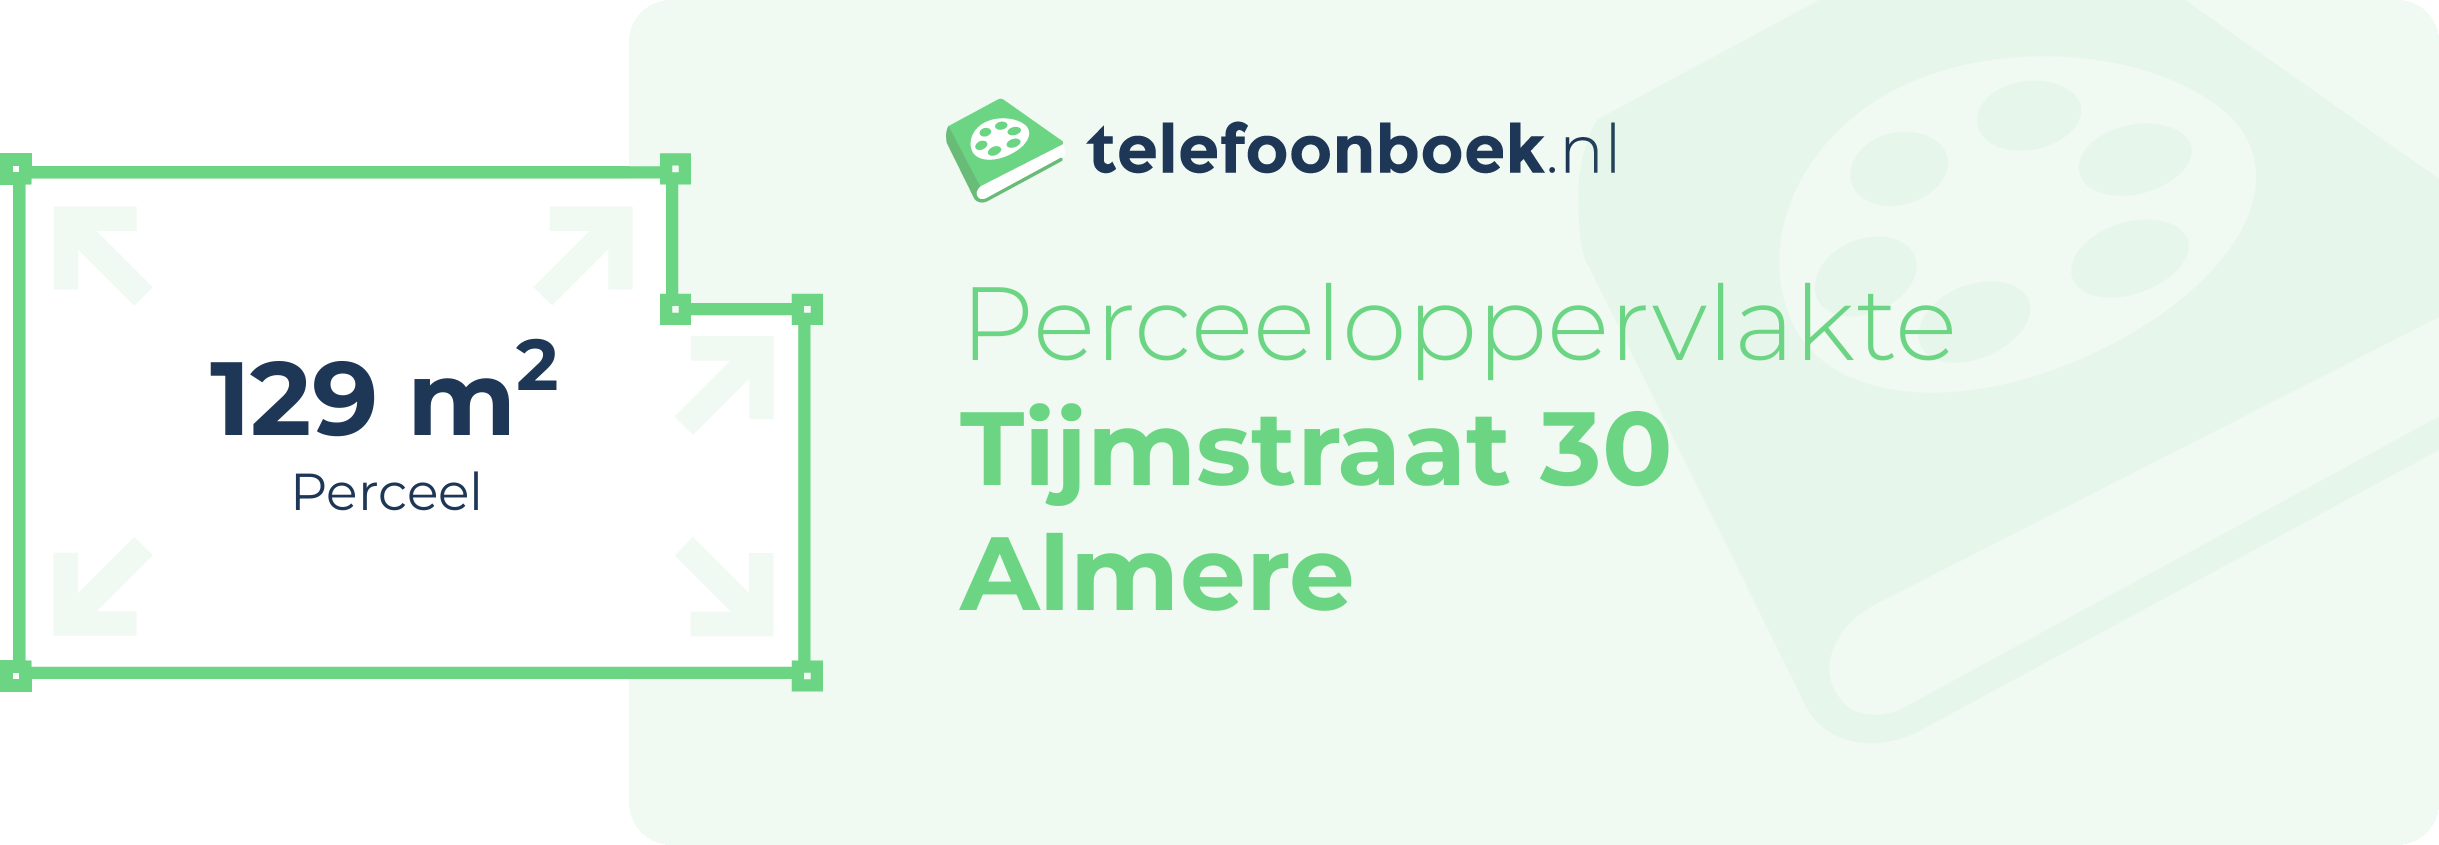 Perceeloppervlakte Tijmstraat 30 Almere